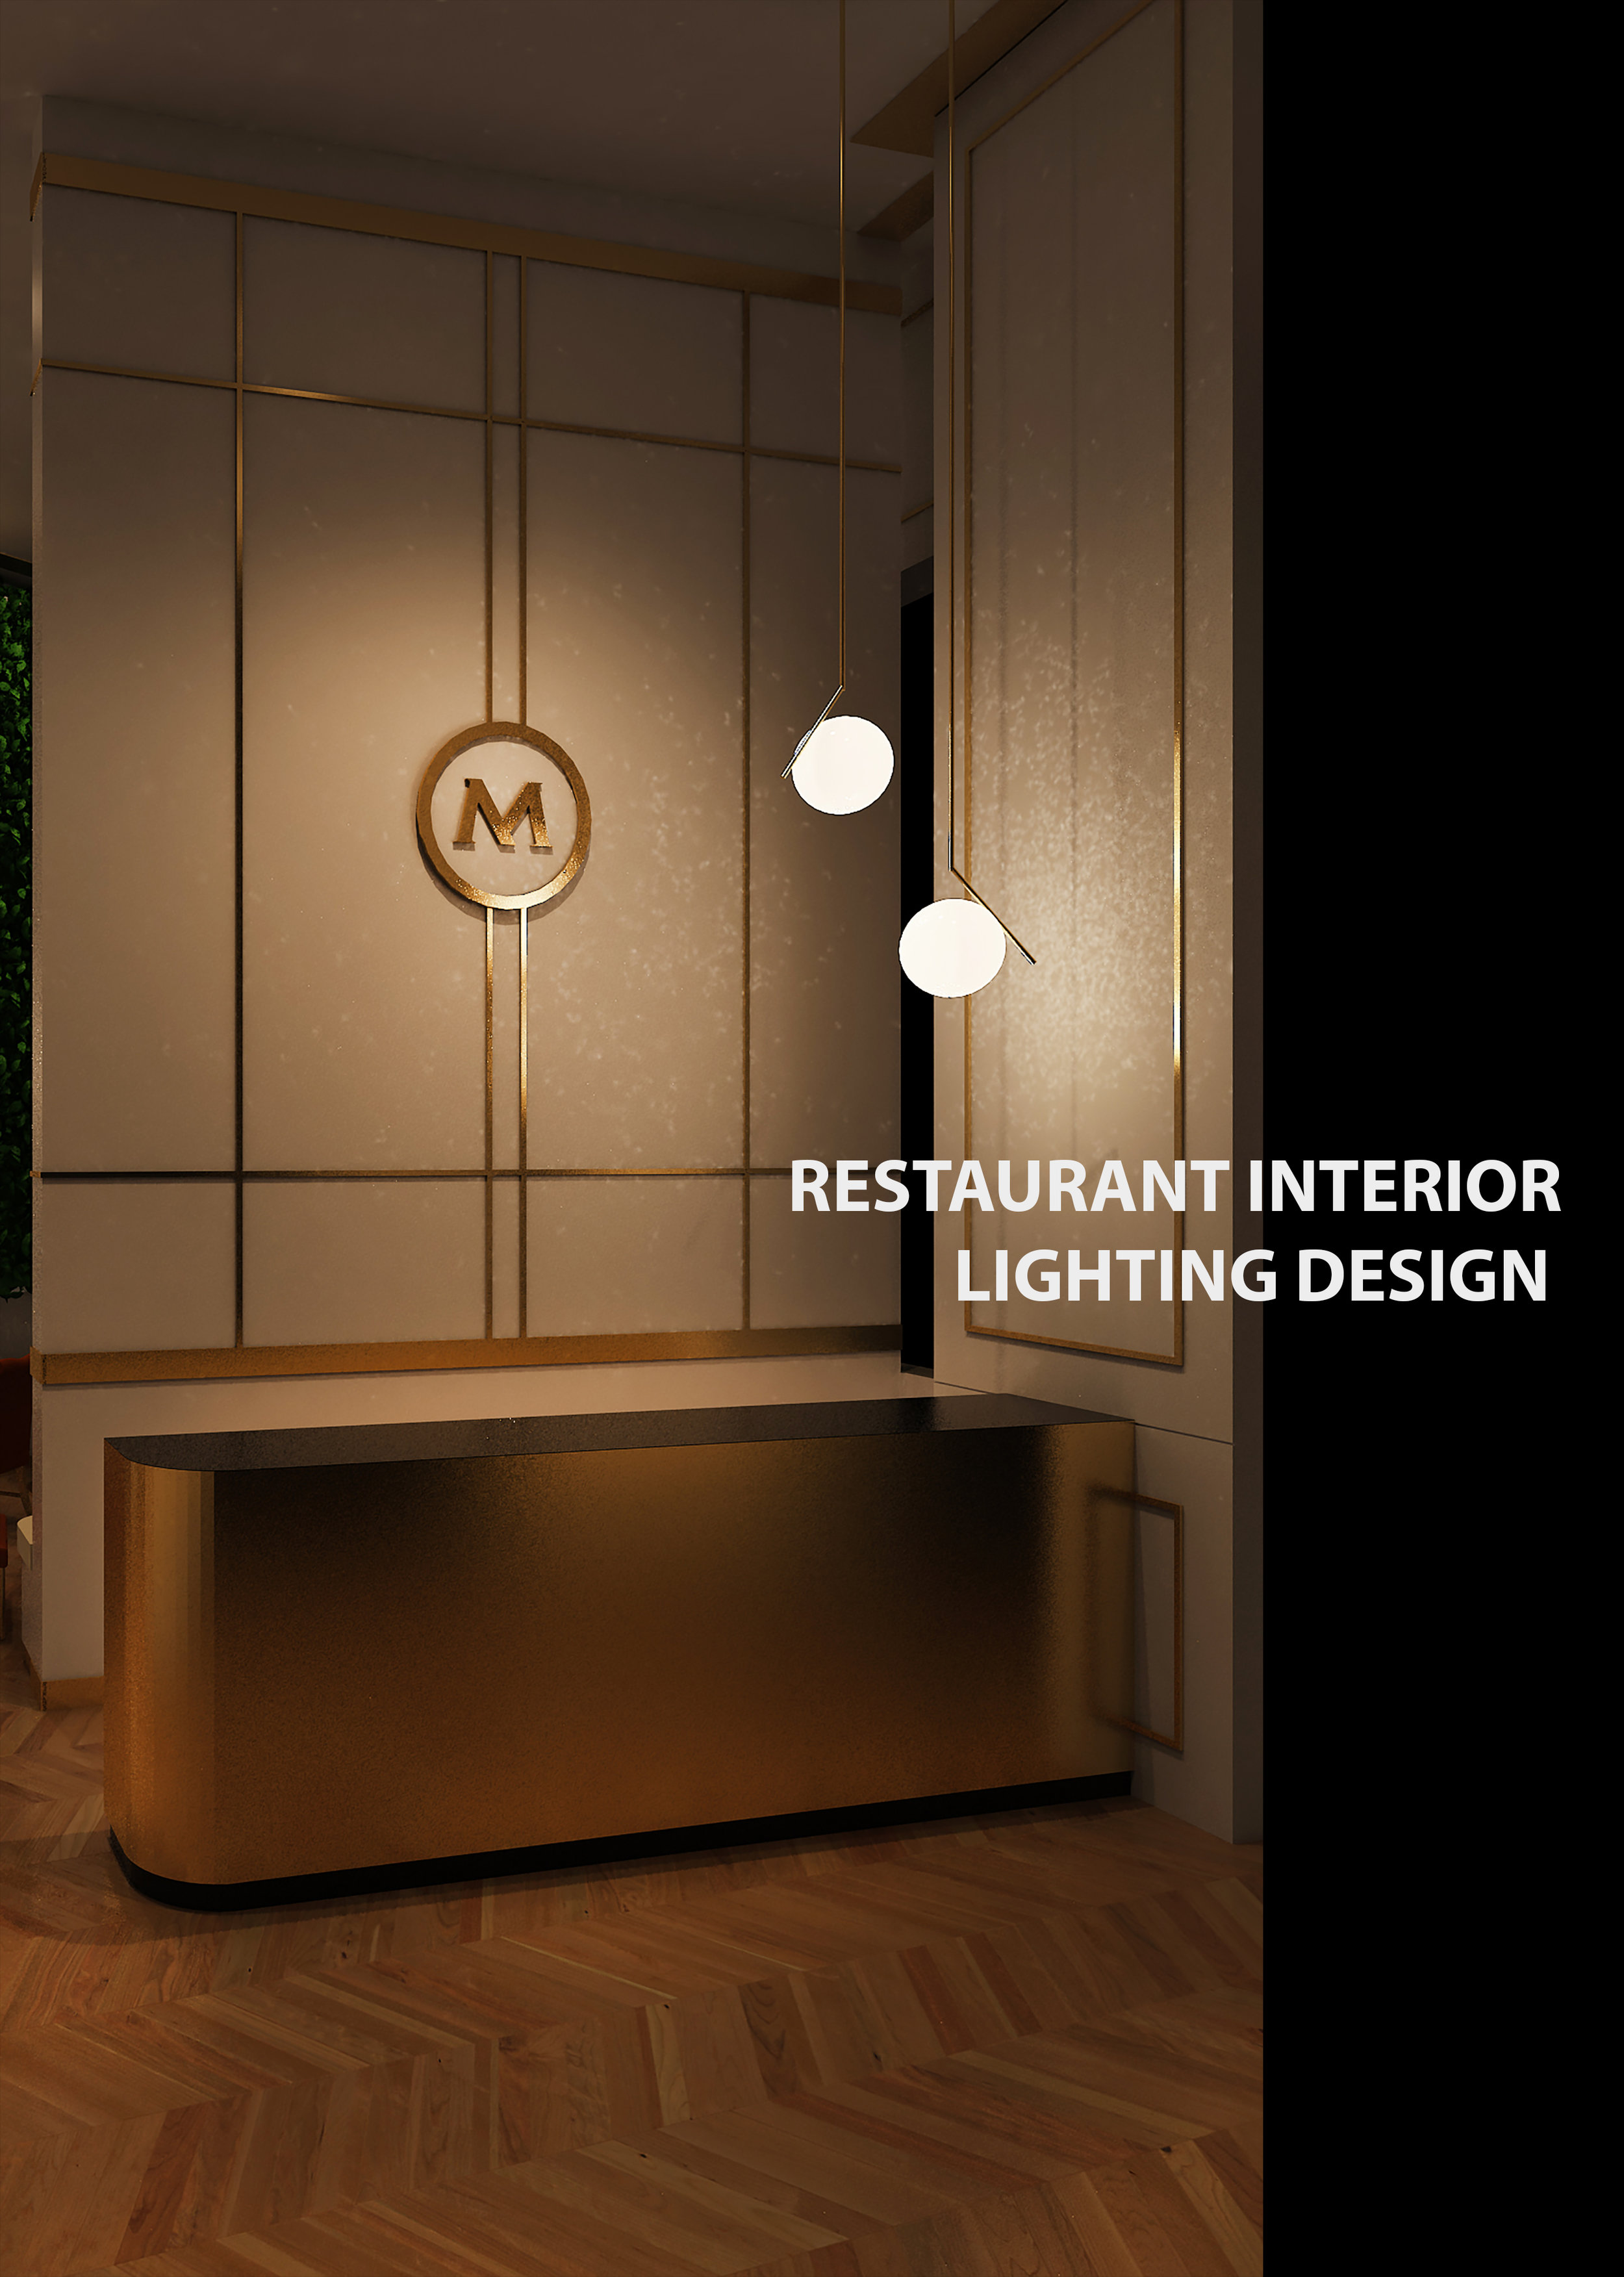 phatthanan-kasemtreerat-mps-l-restaurant-interior-lighting-design_34479504473_o.jpg